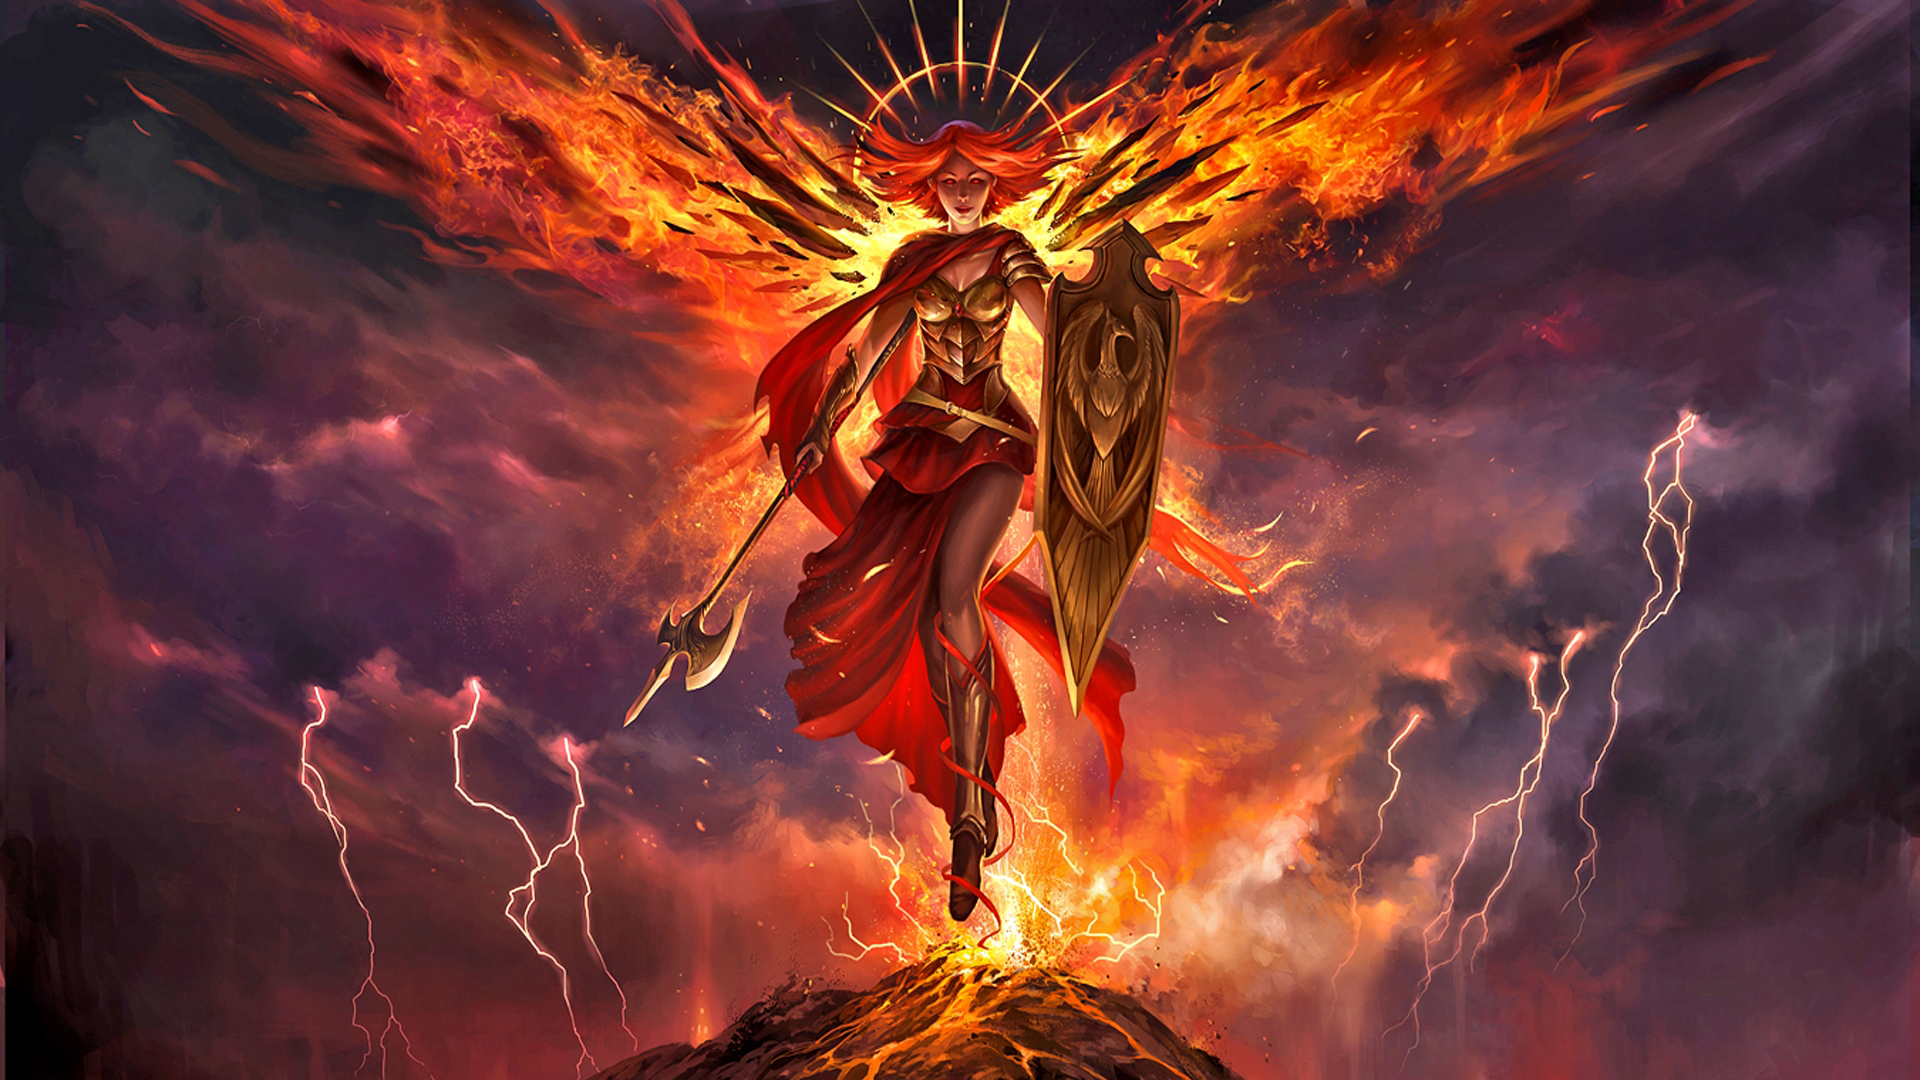 Angel Warrior Magic The Gathering Wallpaper, HD Games 4K Wallpapers